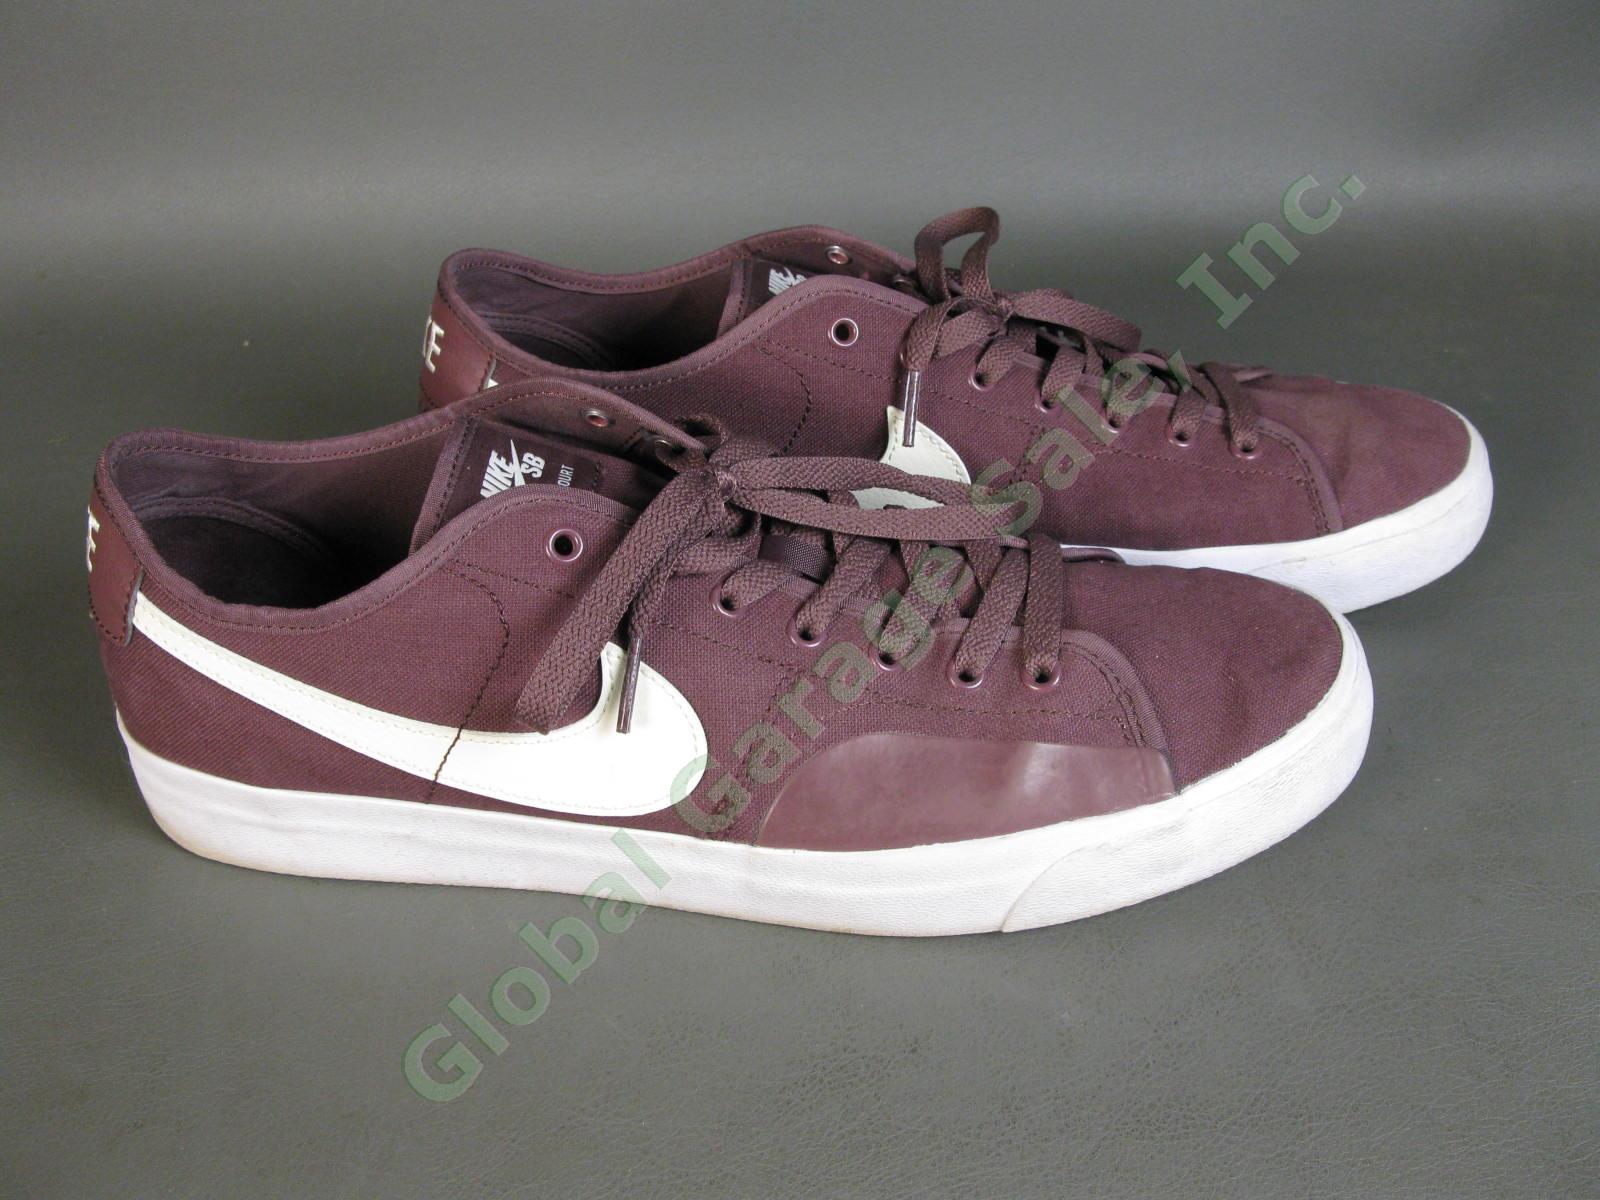 Nike SB Blazer Court Sneakers Shoes CV1658-601 Dark Wine Purple US Mens Size 12